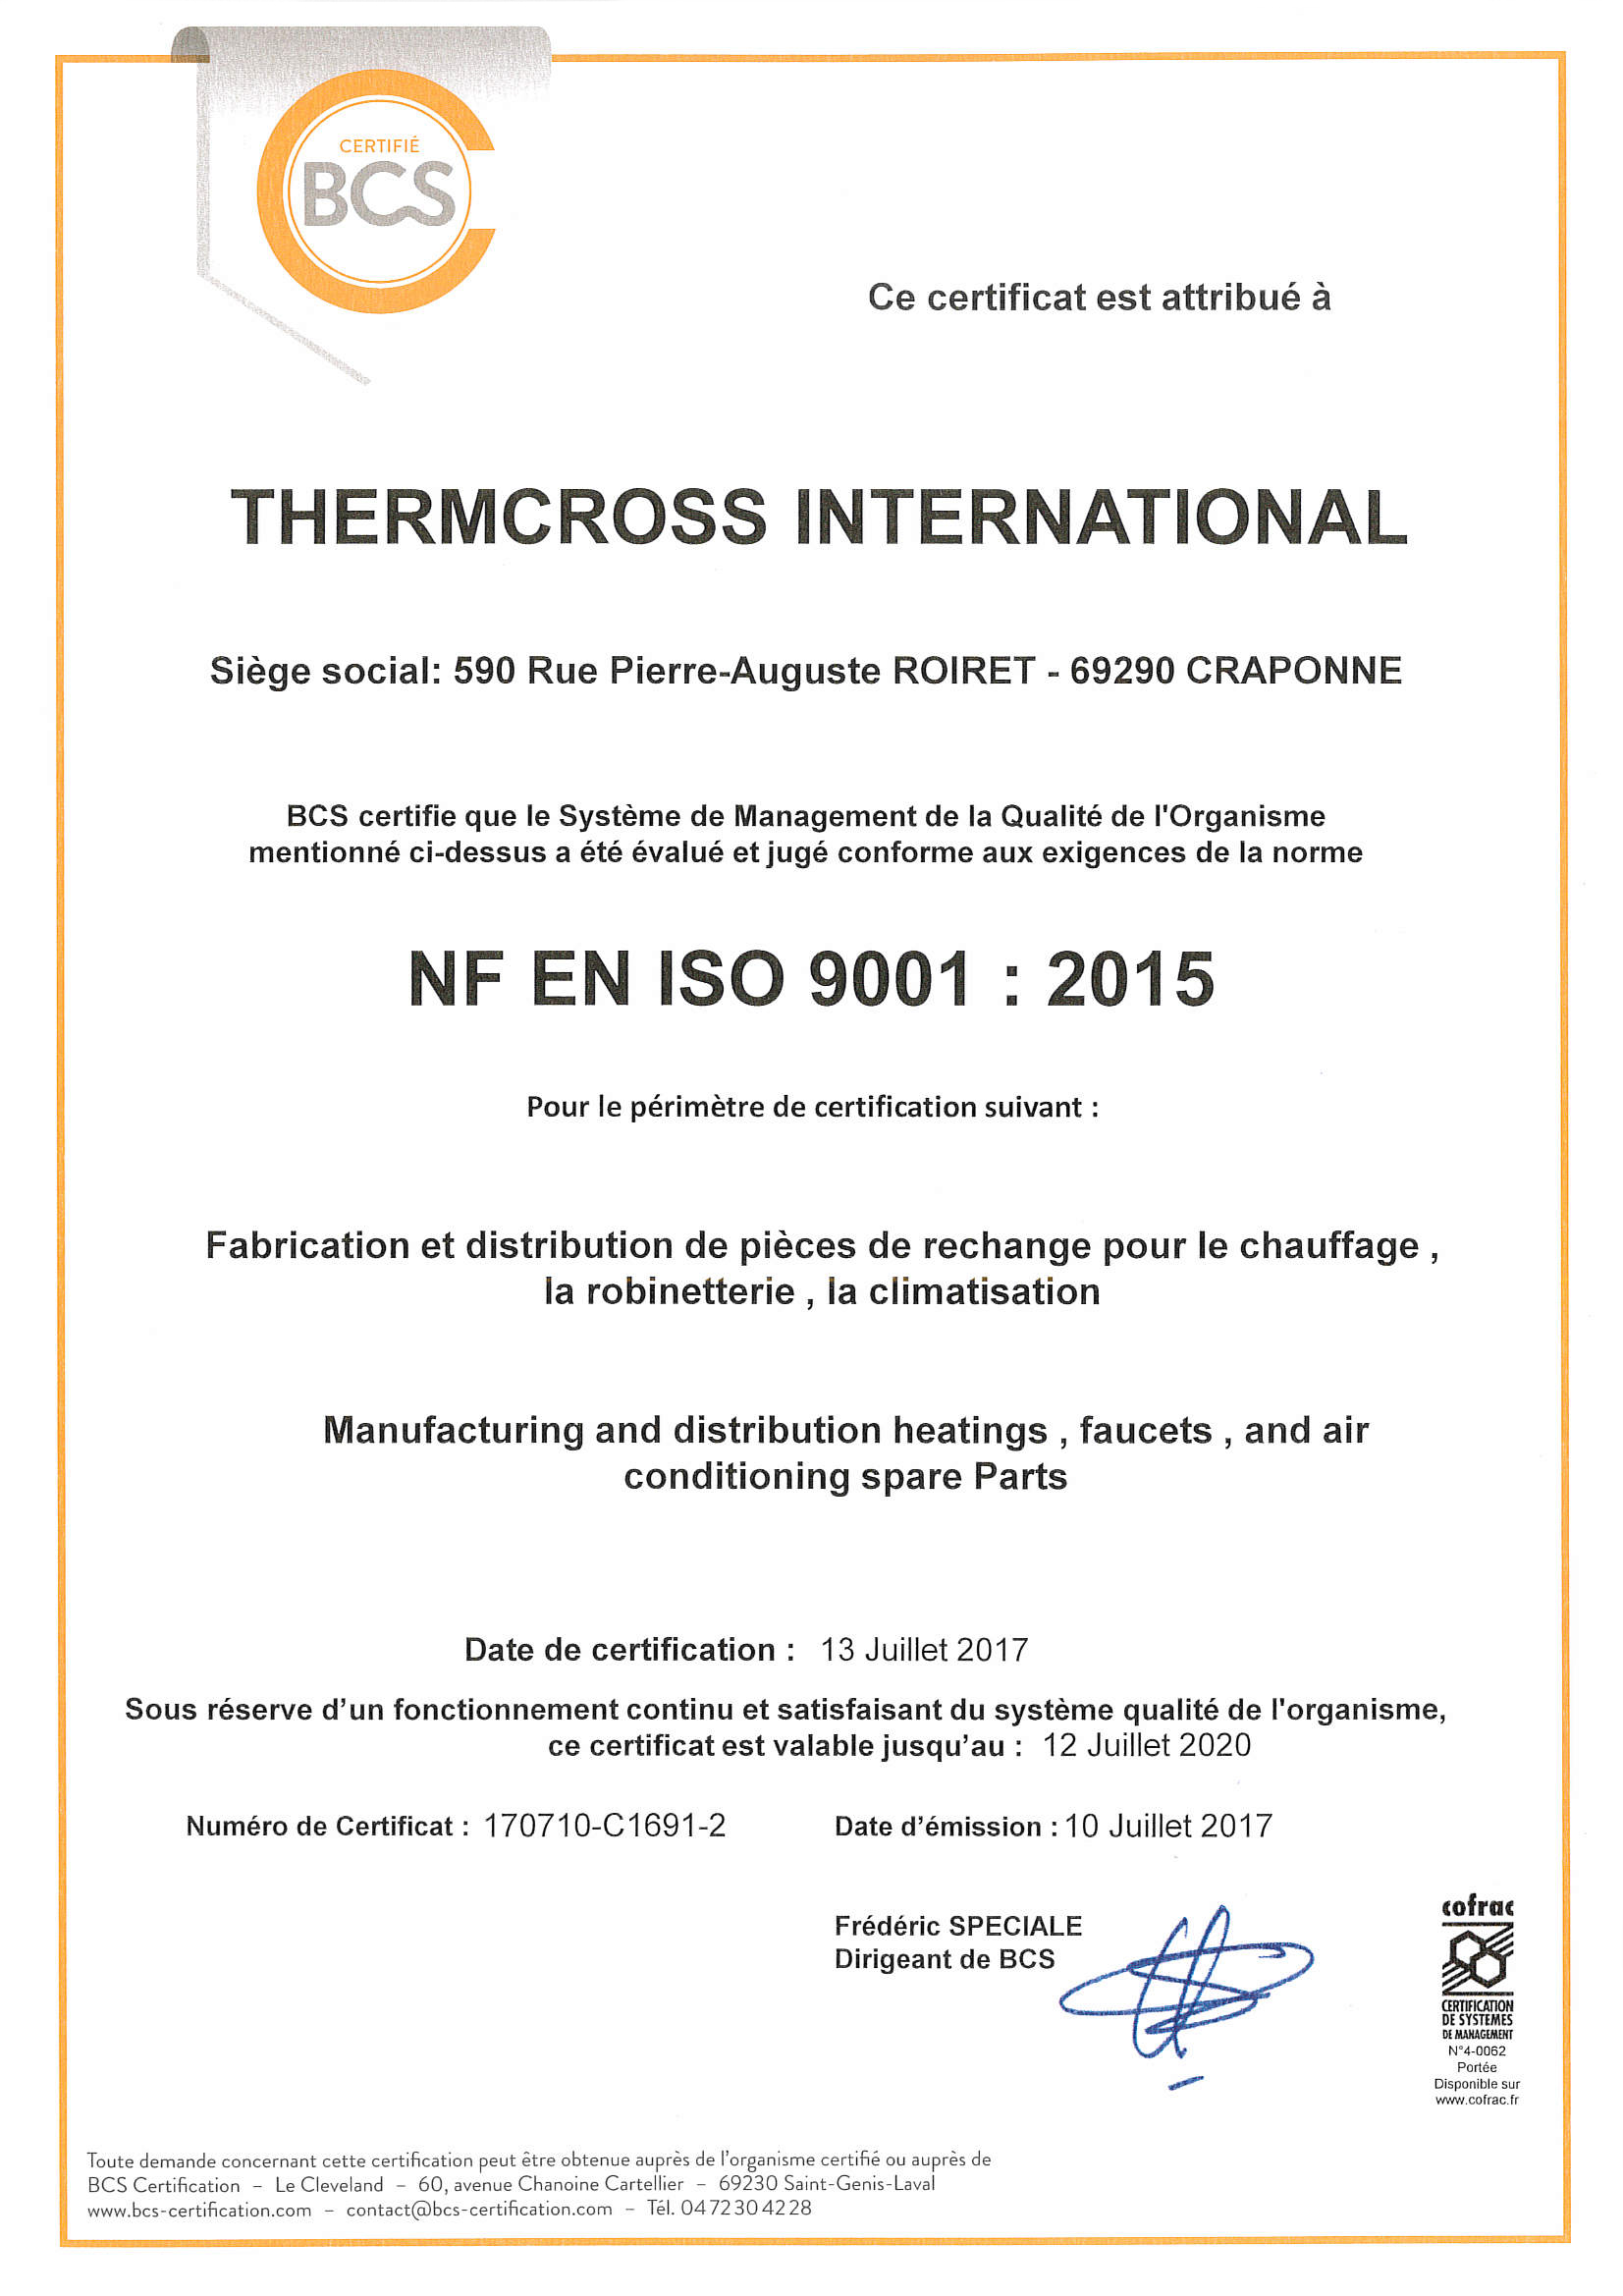 Termostato de ambiente - Thermcross International